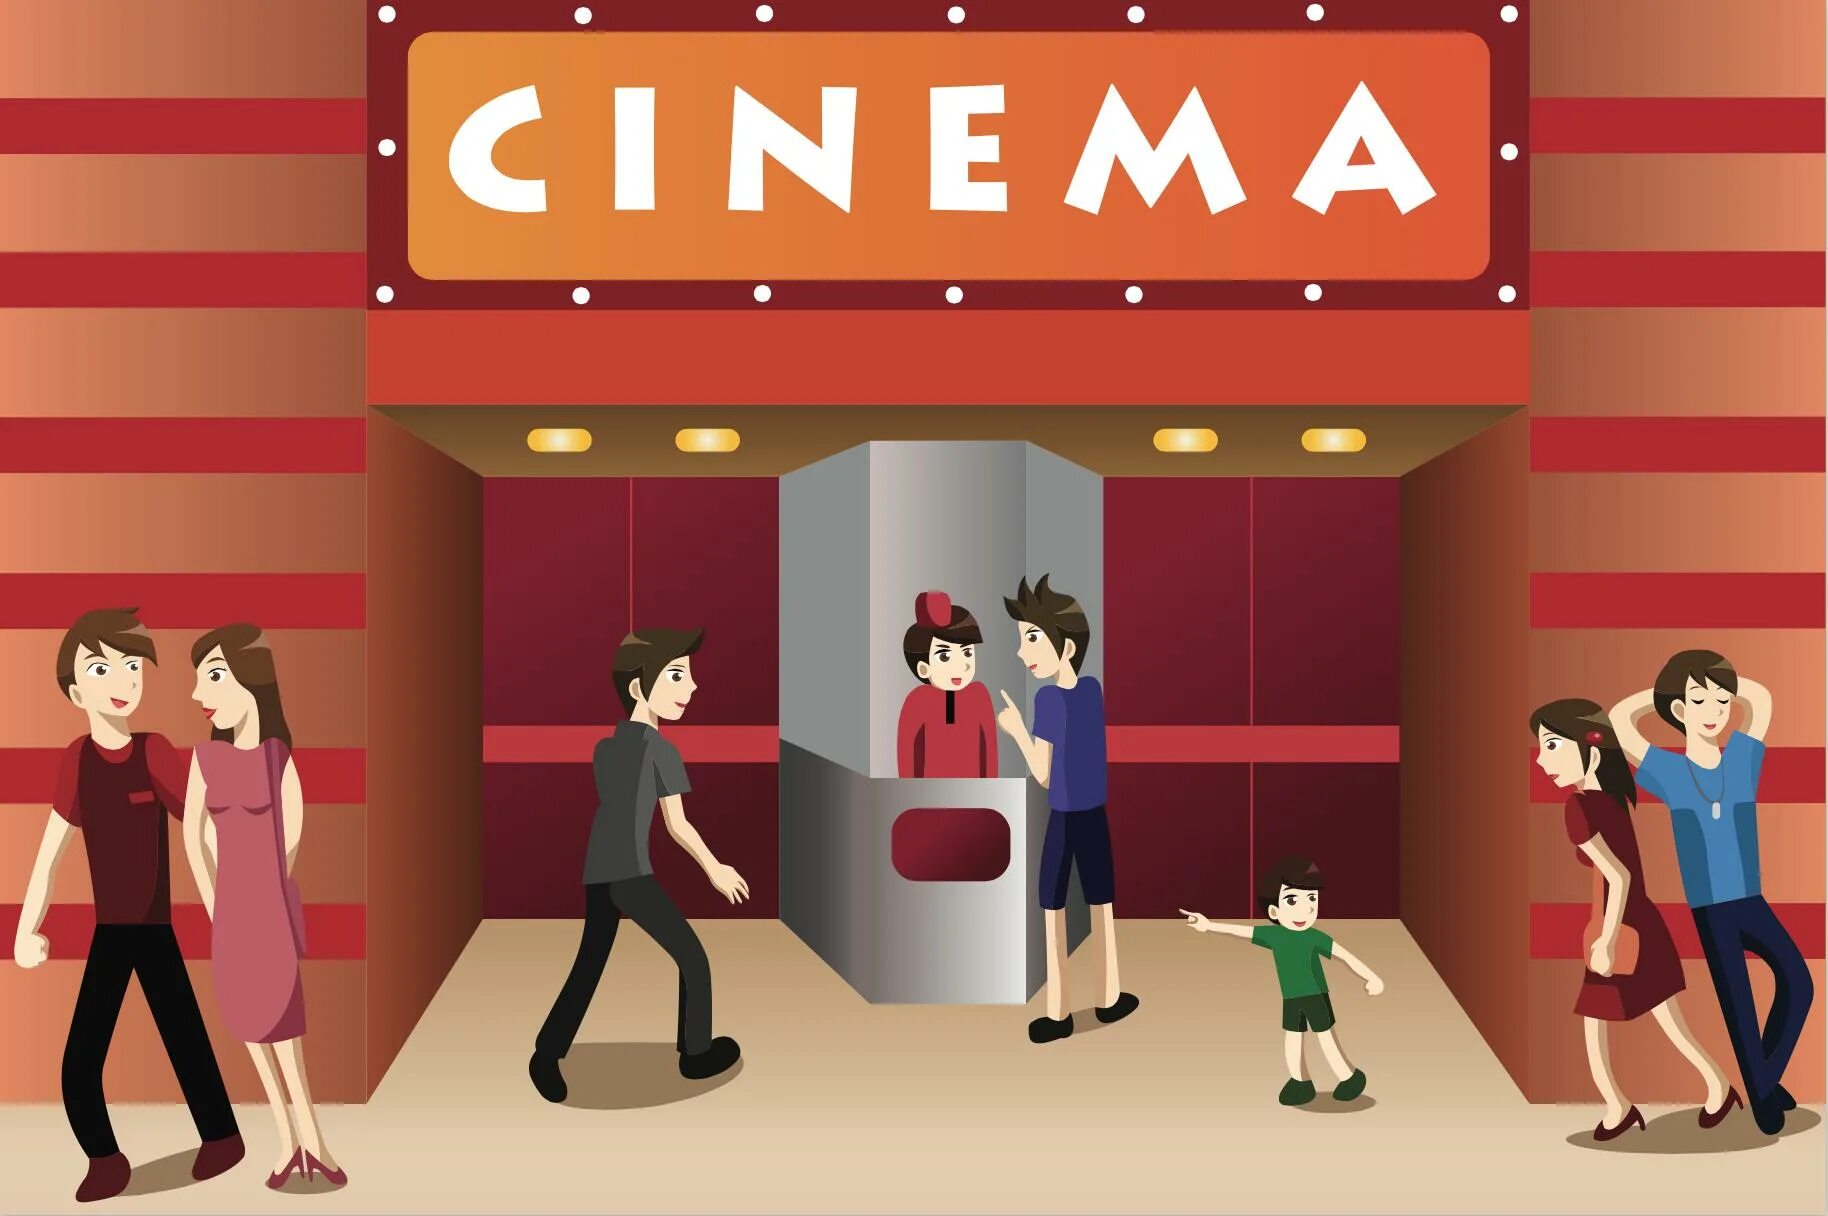 Do he go to the cinema. Cinema картина для детей. Дети идут в кинотеатр рисунок. Кинотеатр рисунок.